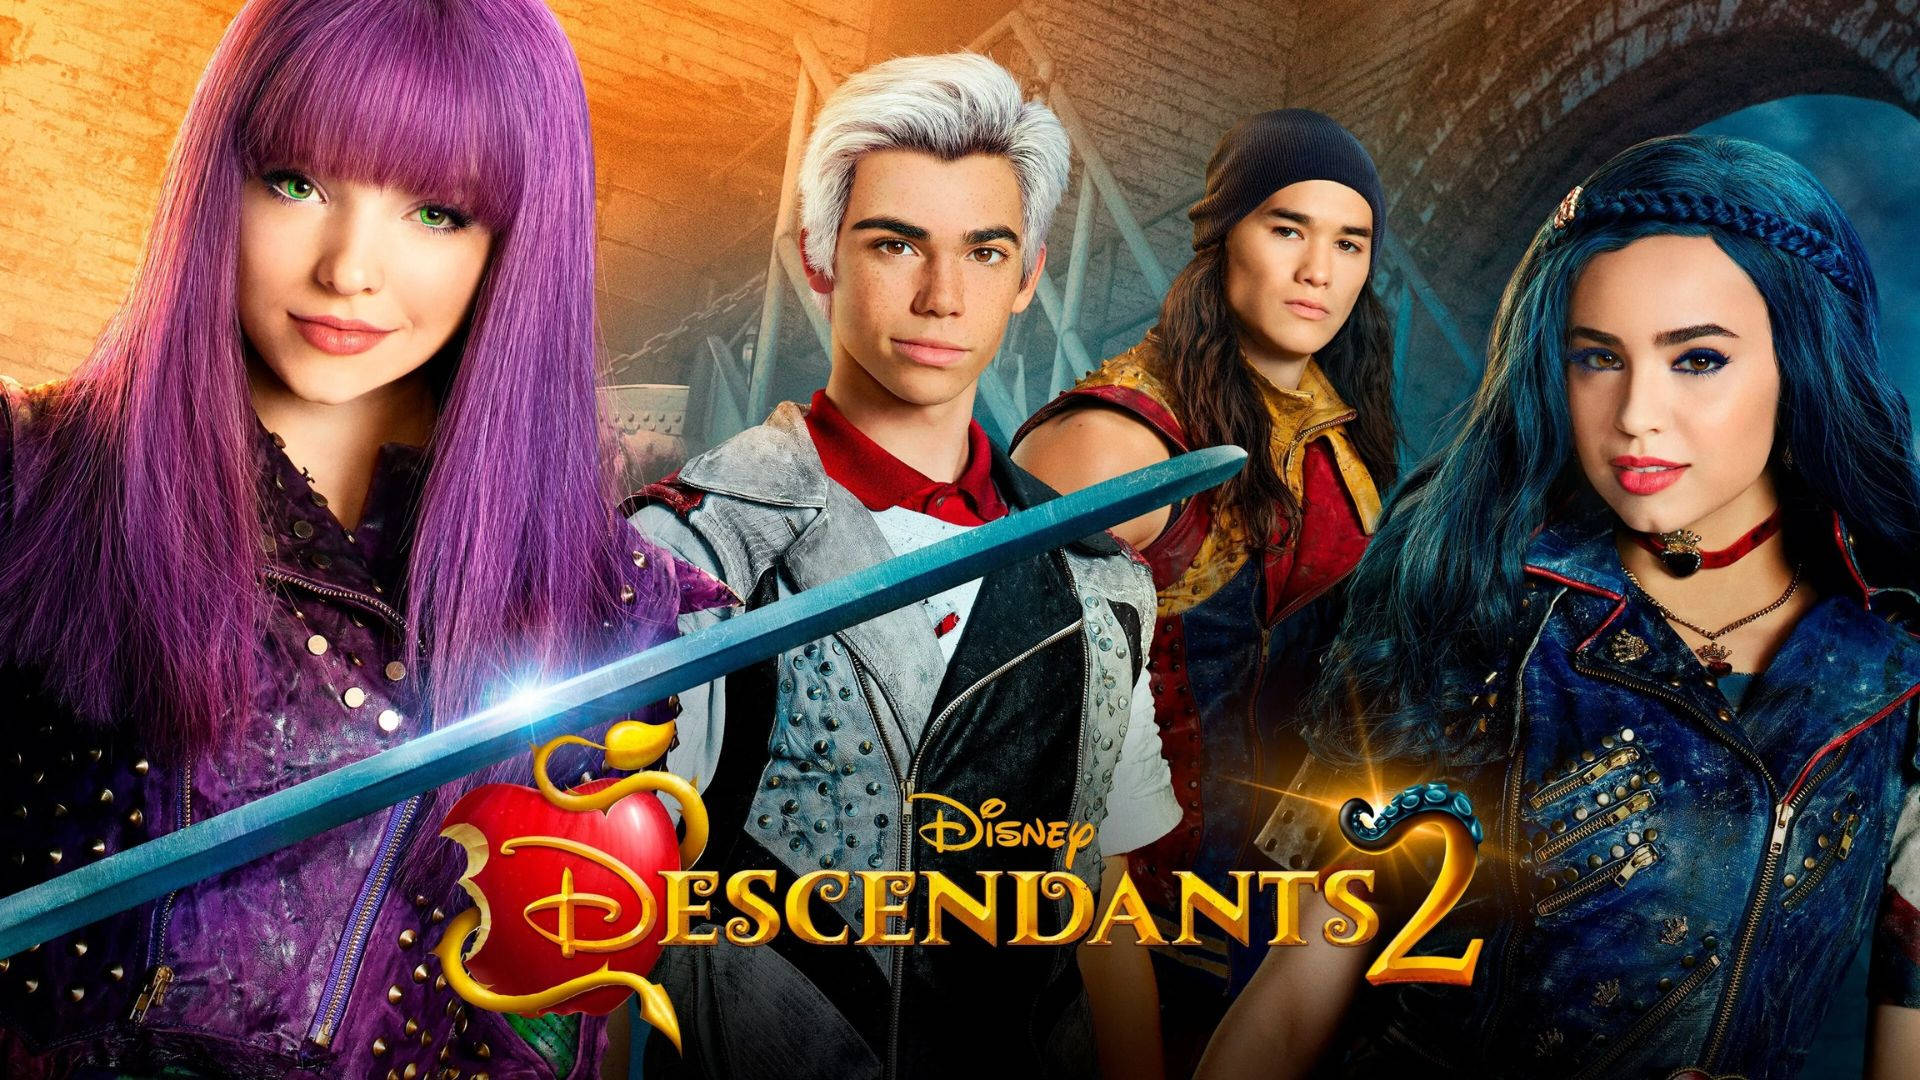 Descendants 2 Cast Cover Poster Wallpaper